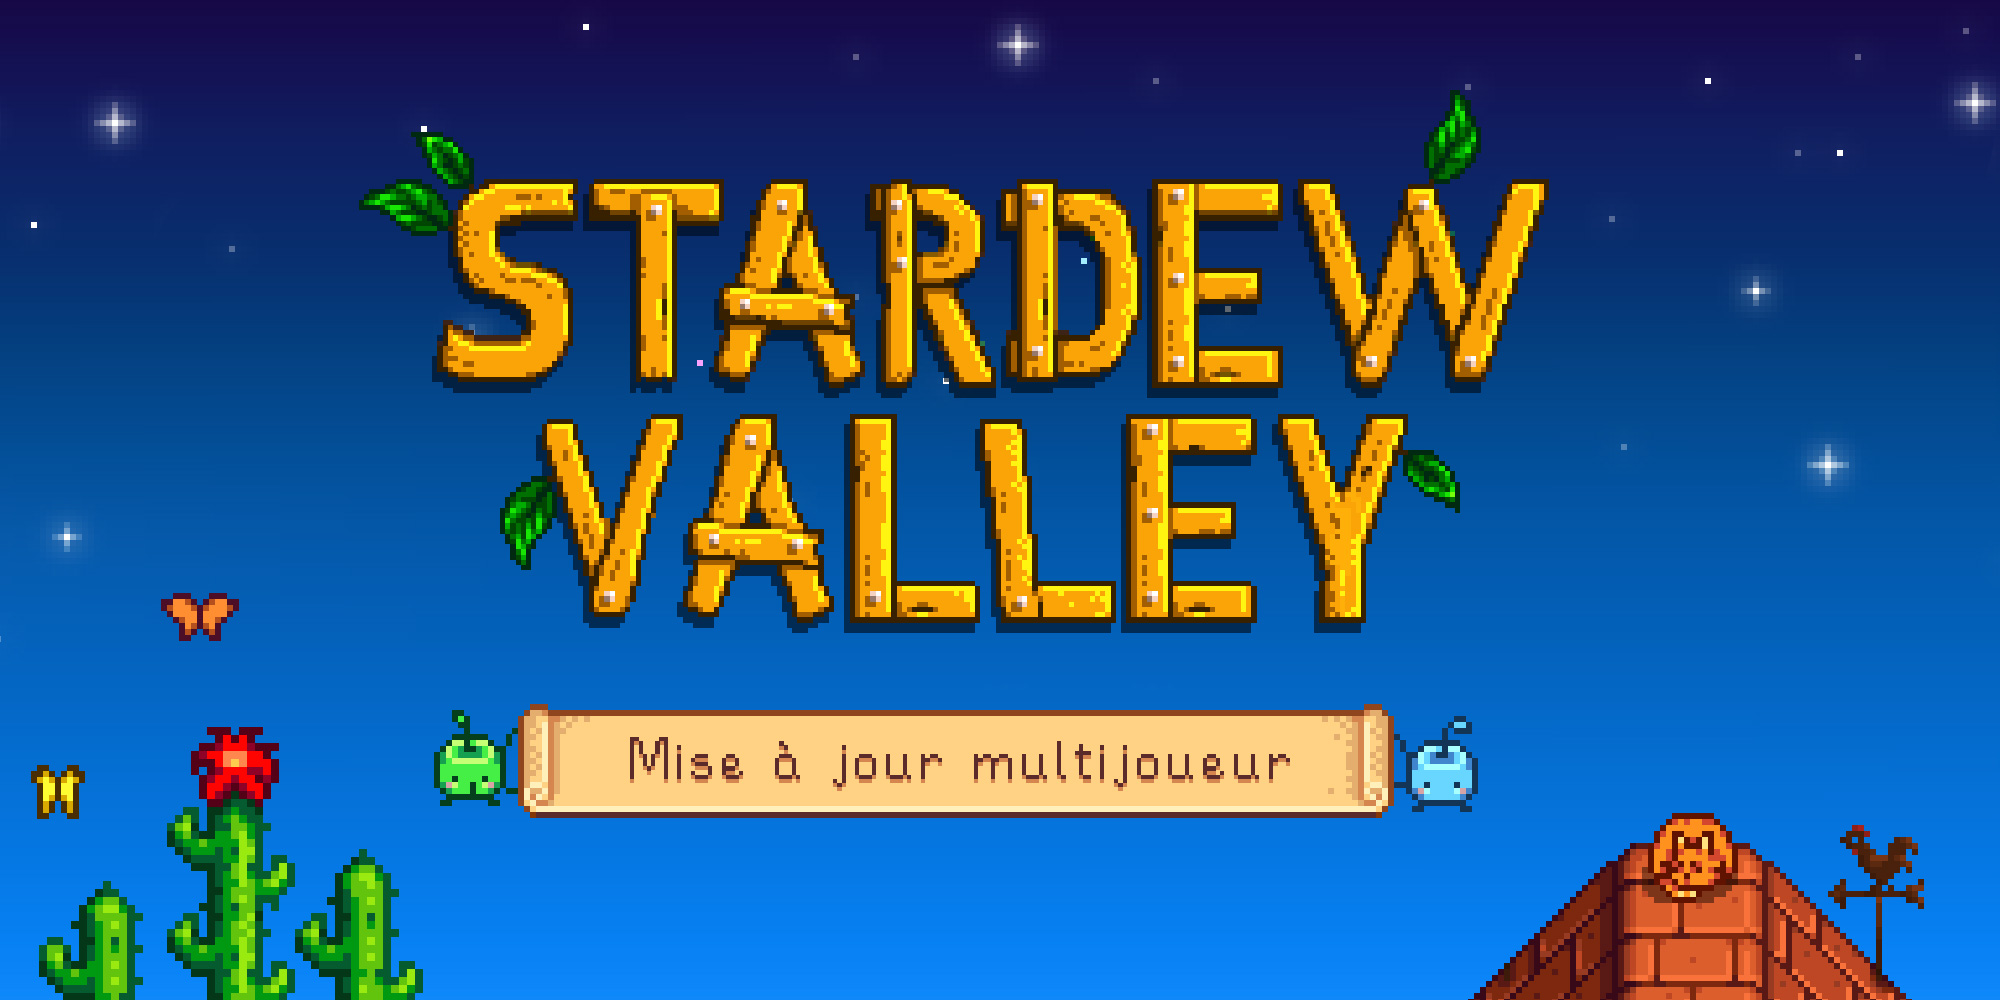 Stardew Valley / Online Steam / Full Access / Warranty / Inactive / Gift